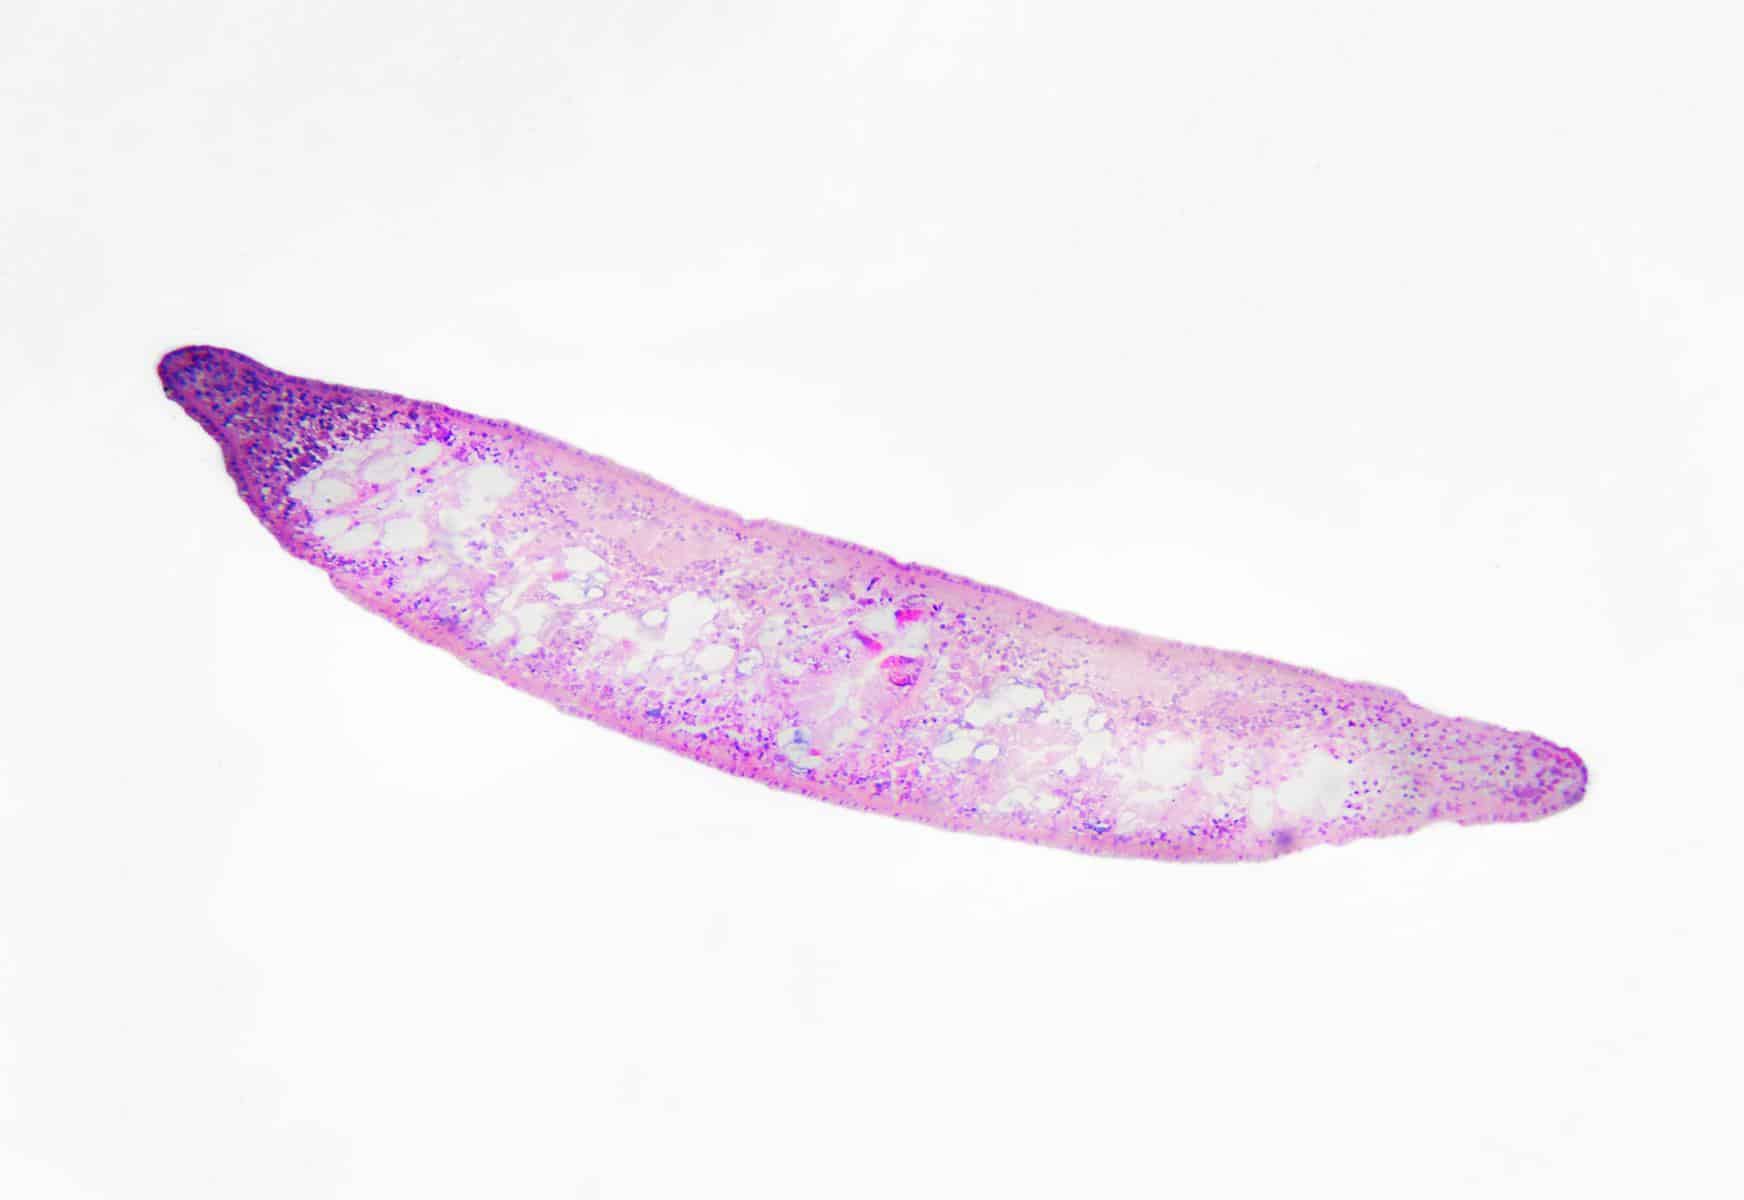 planaria worm microscopic image